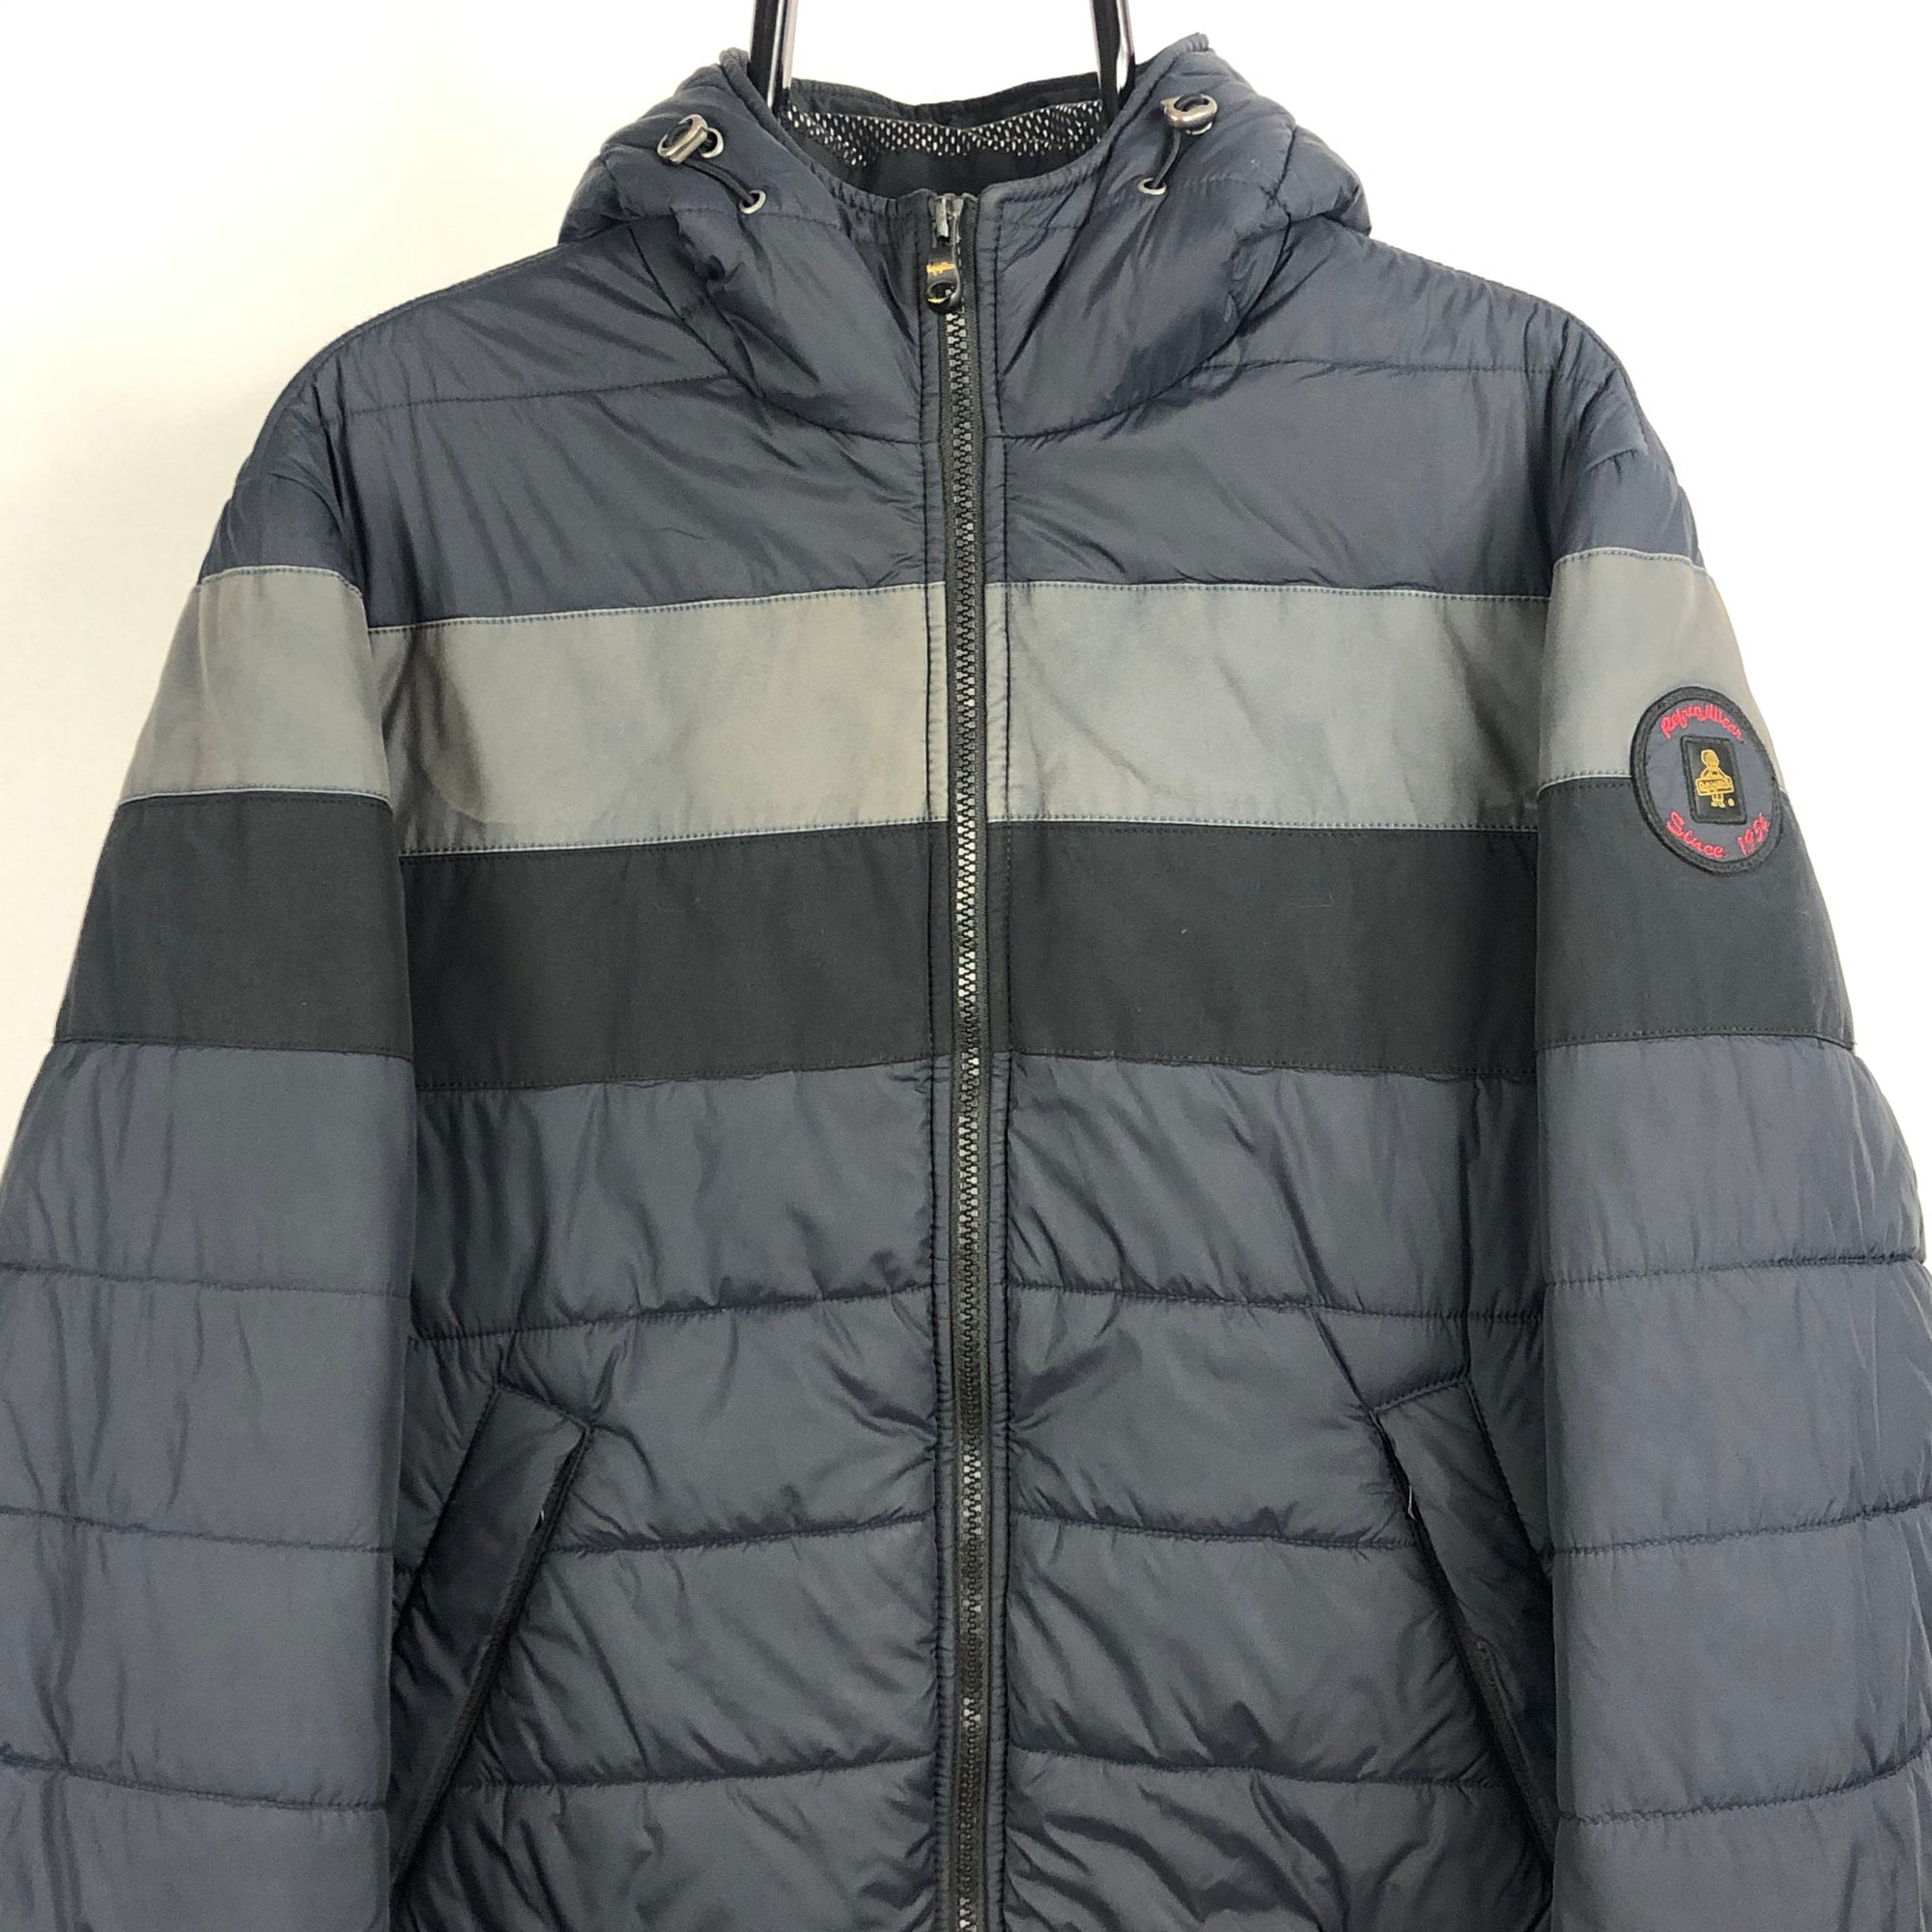 Refrigiwear Puffer Jacket in Navy - Men's Medium/Women's Large